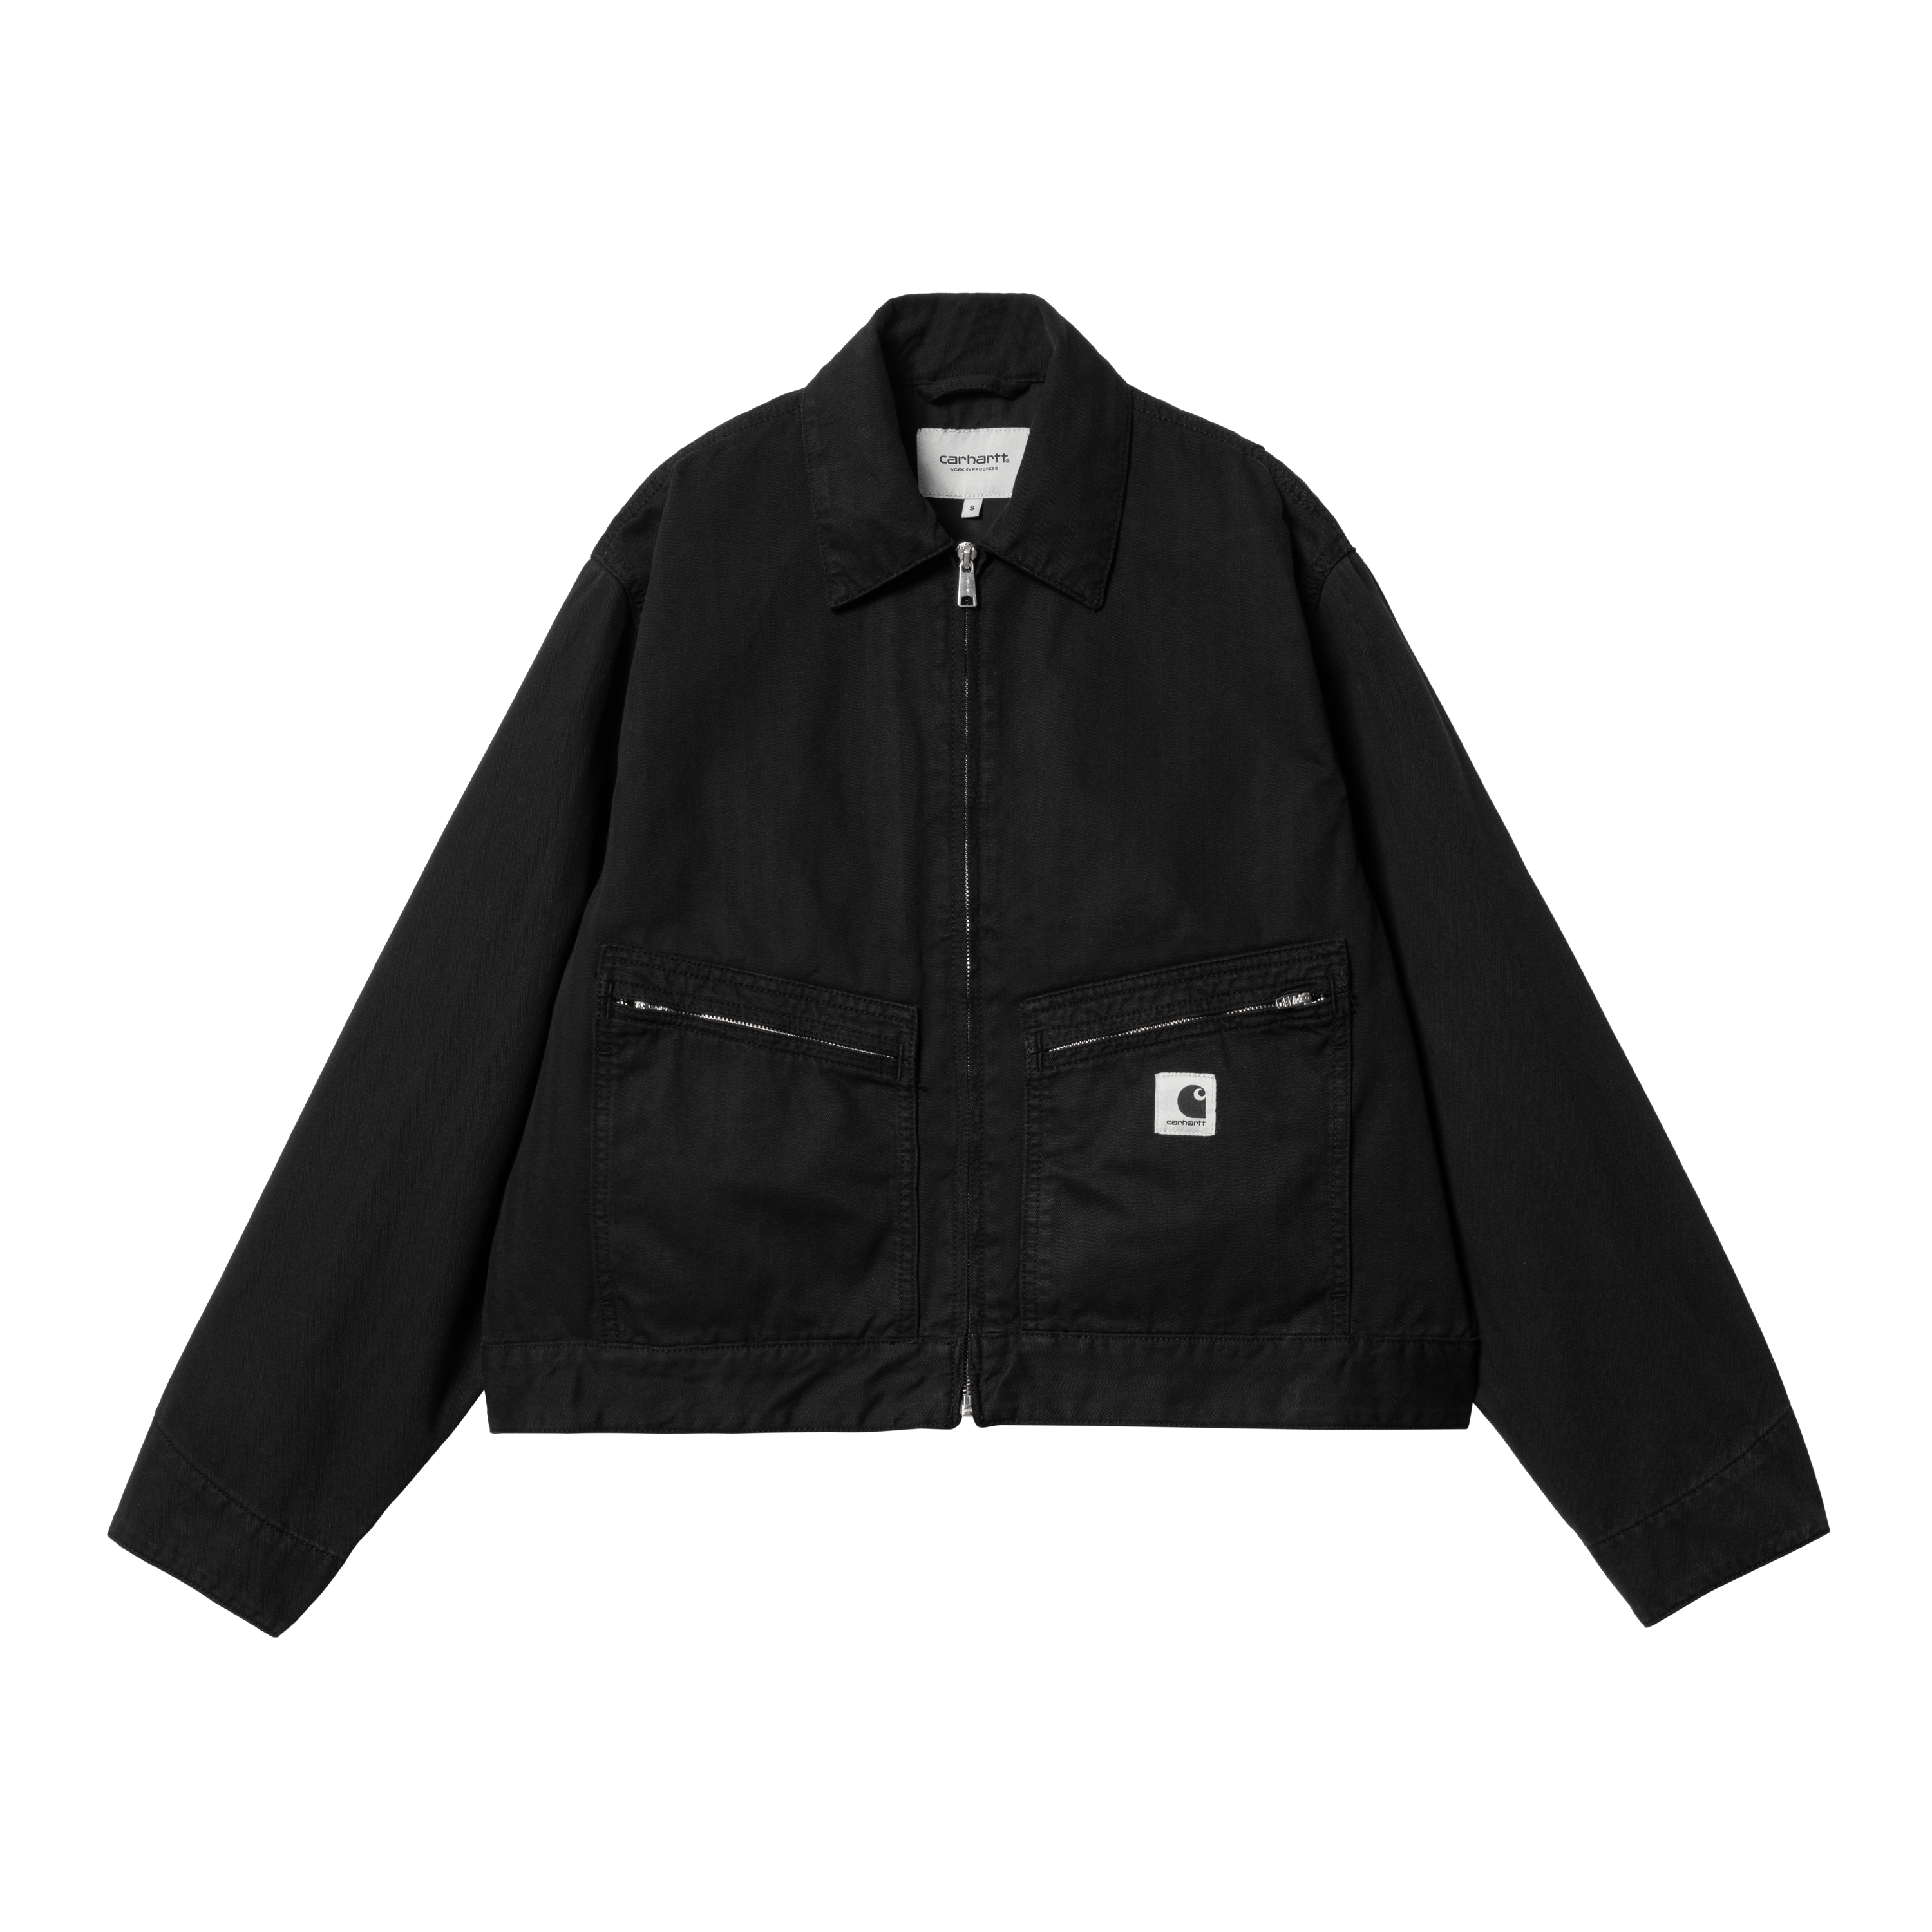 Carhartt WIP Women’s Norris Jacket in Black